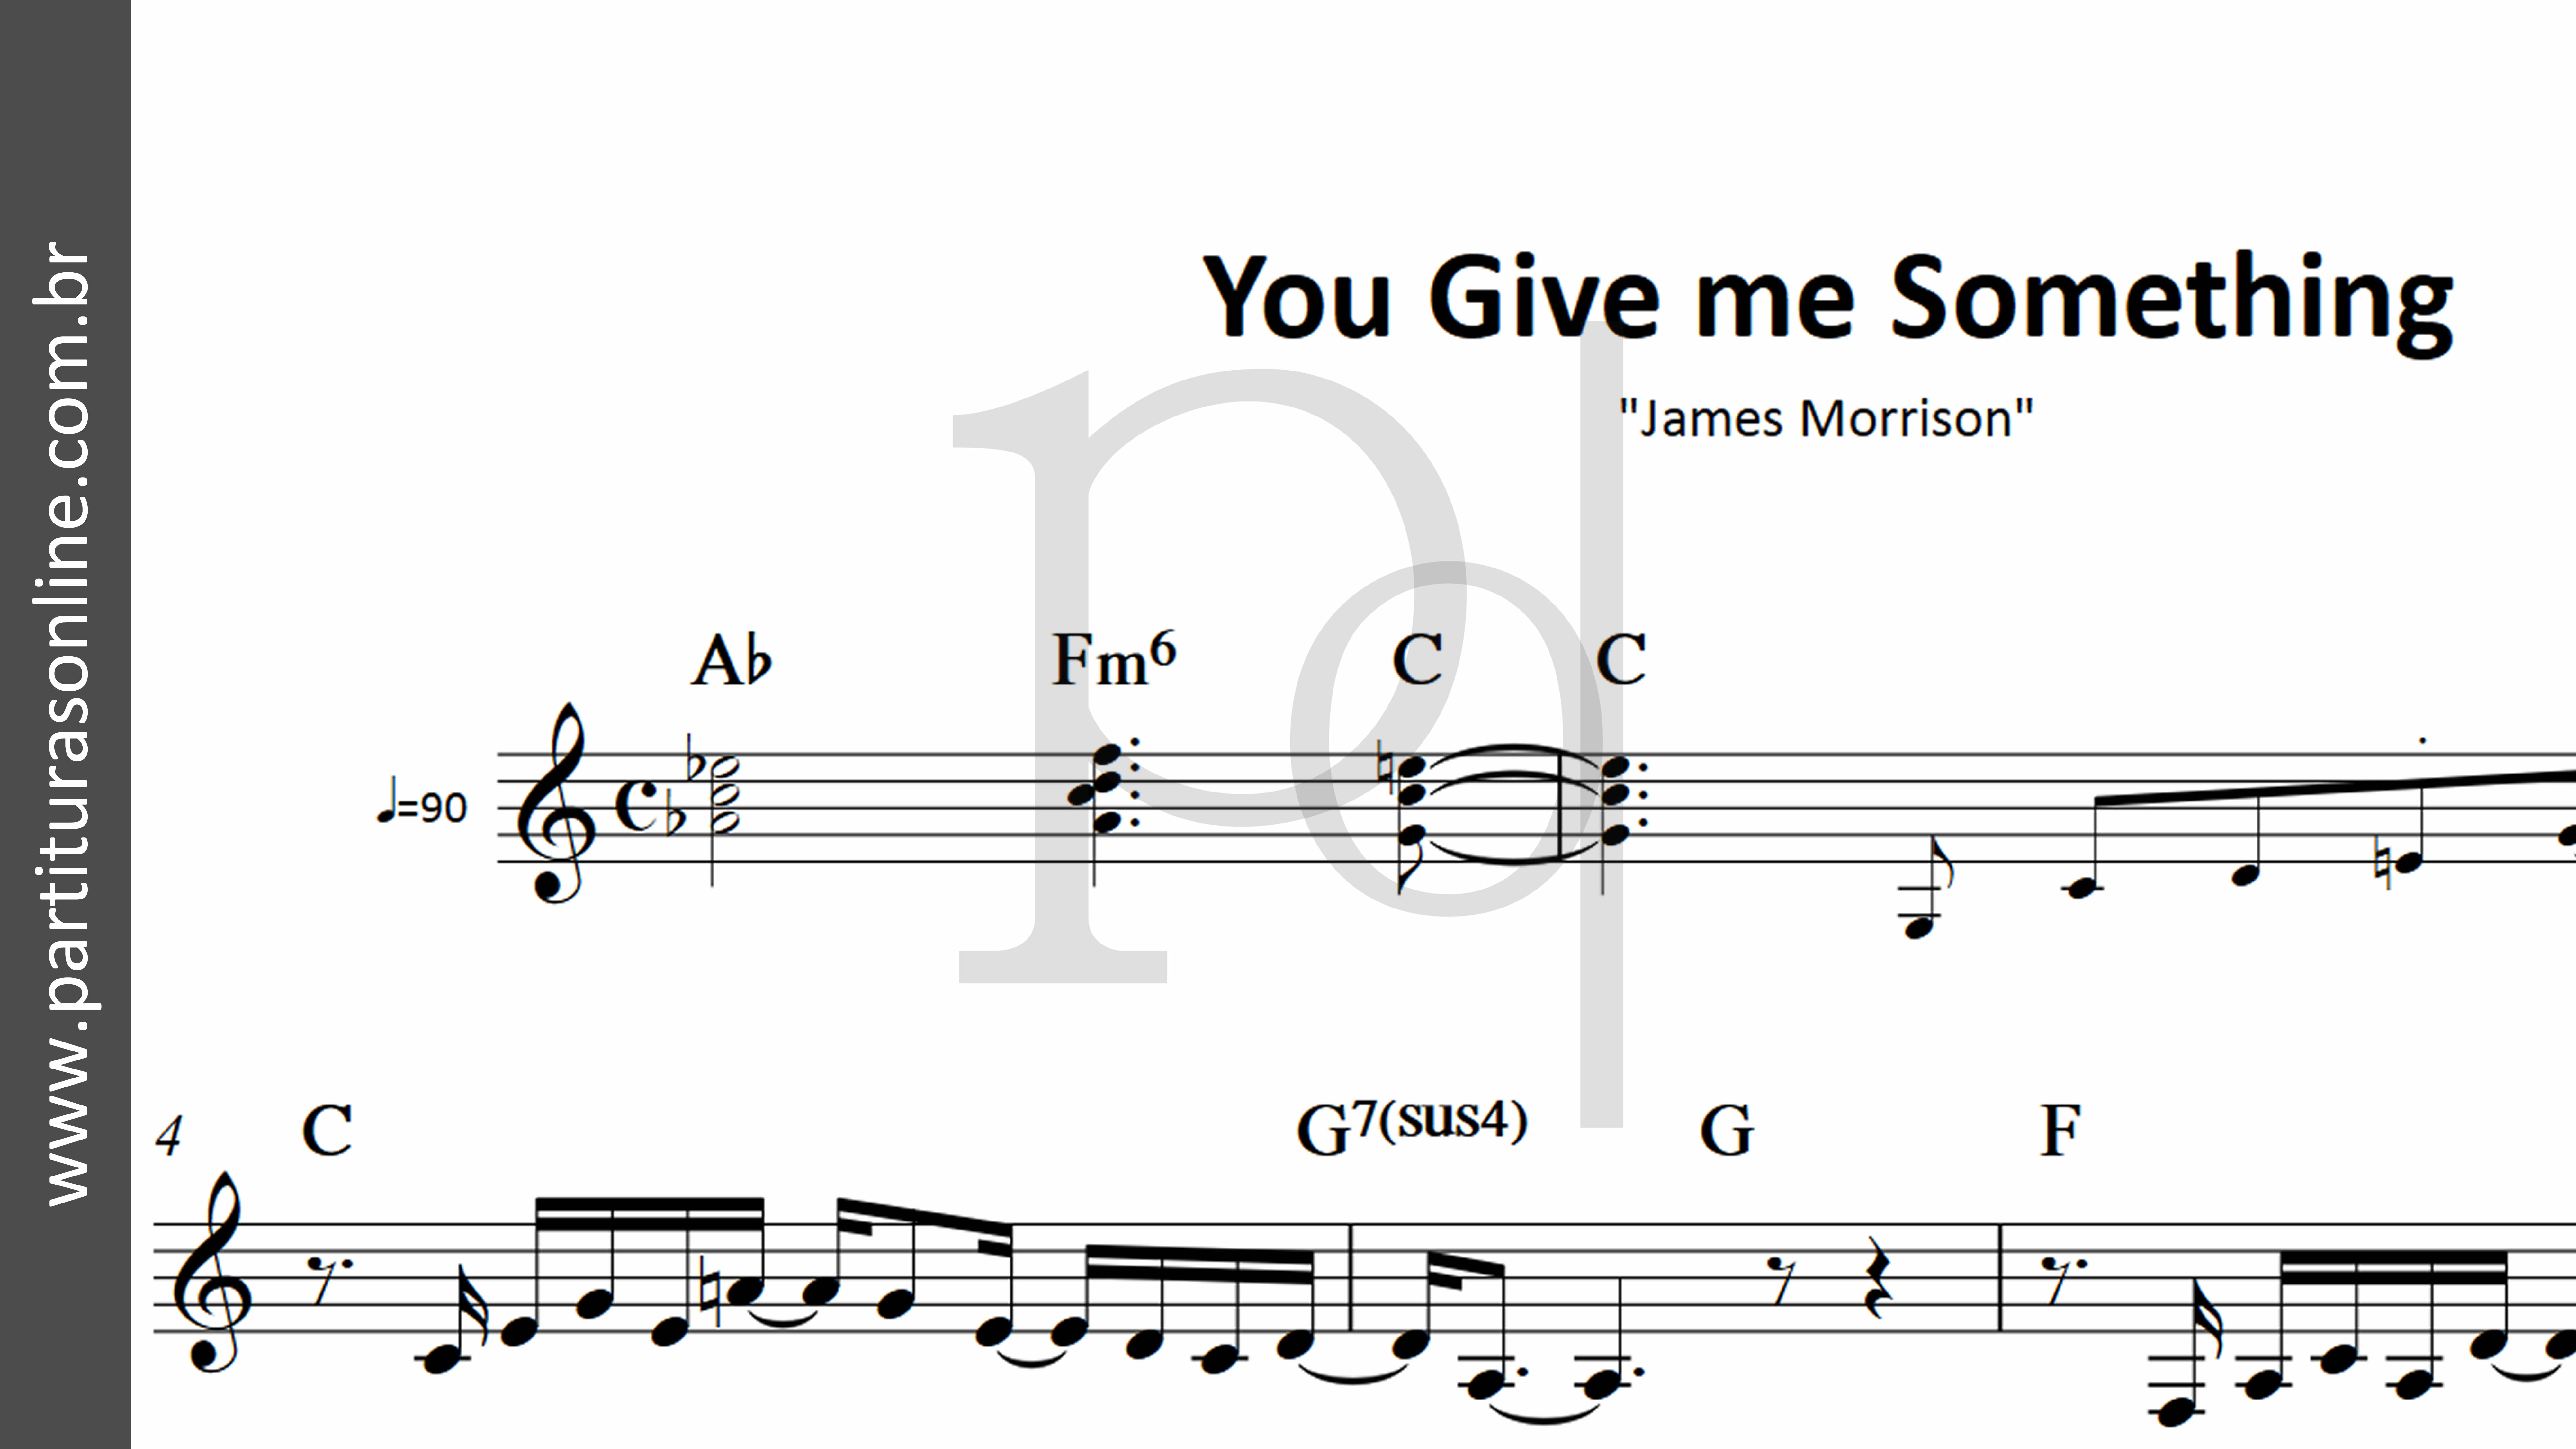 You Give Me Something (tradução) - James Morrison - VAGALUME